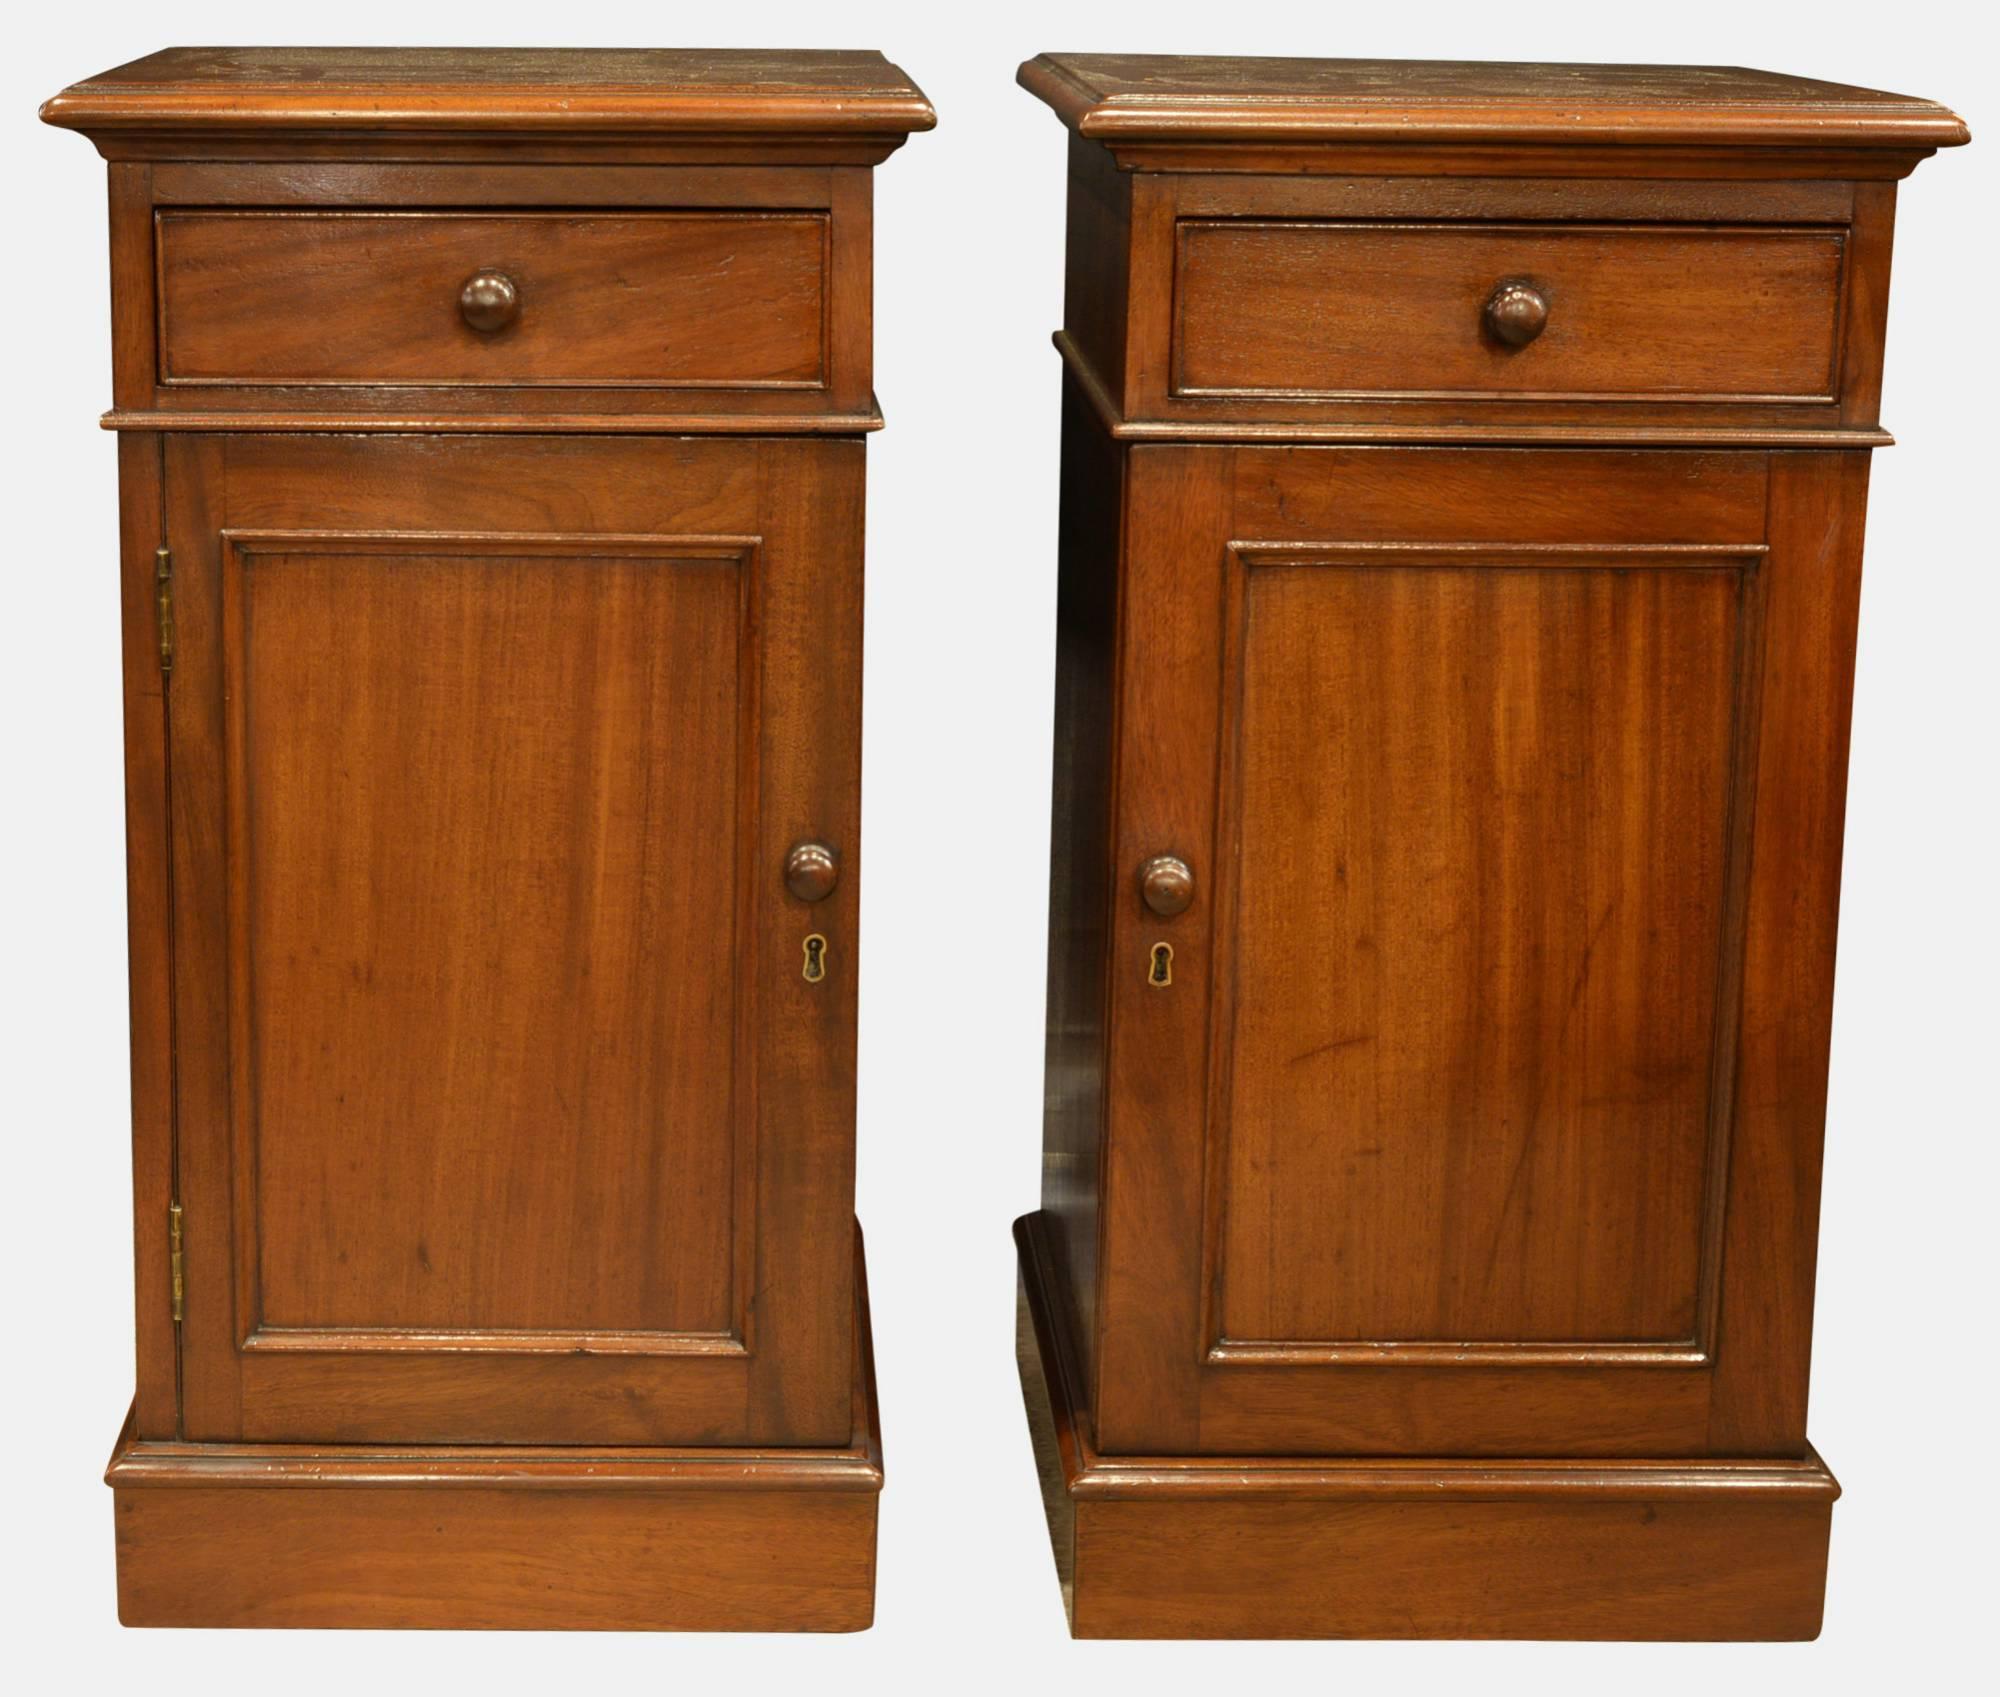 Pair of mahogany bedside cabinets by J.J. Helsdon, Lincoln Inn Fields.